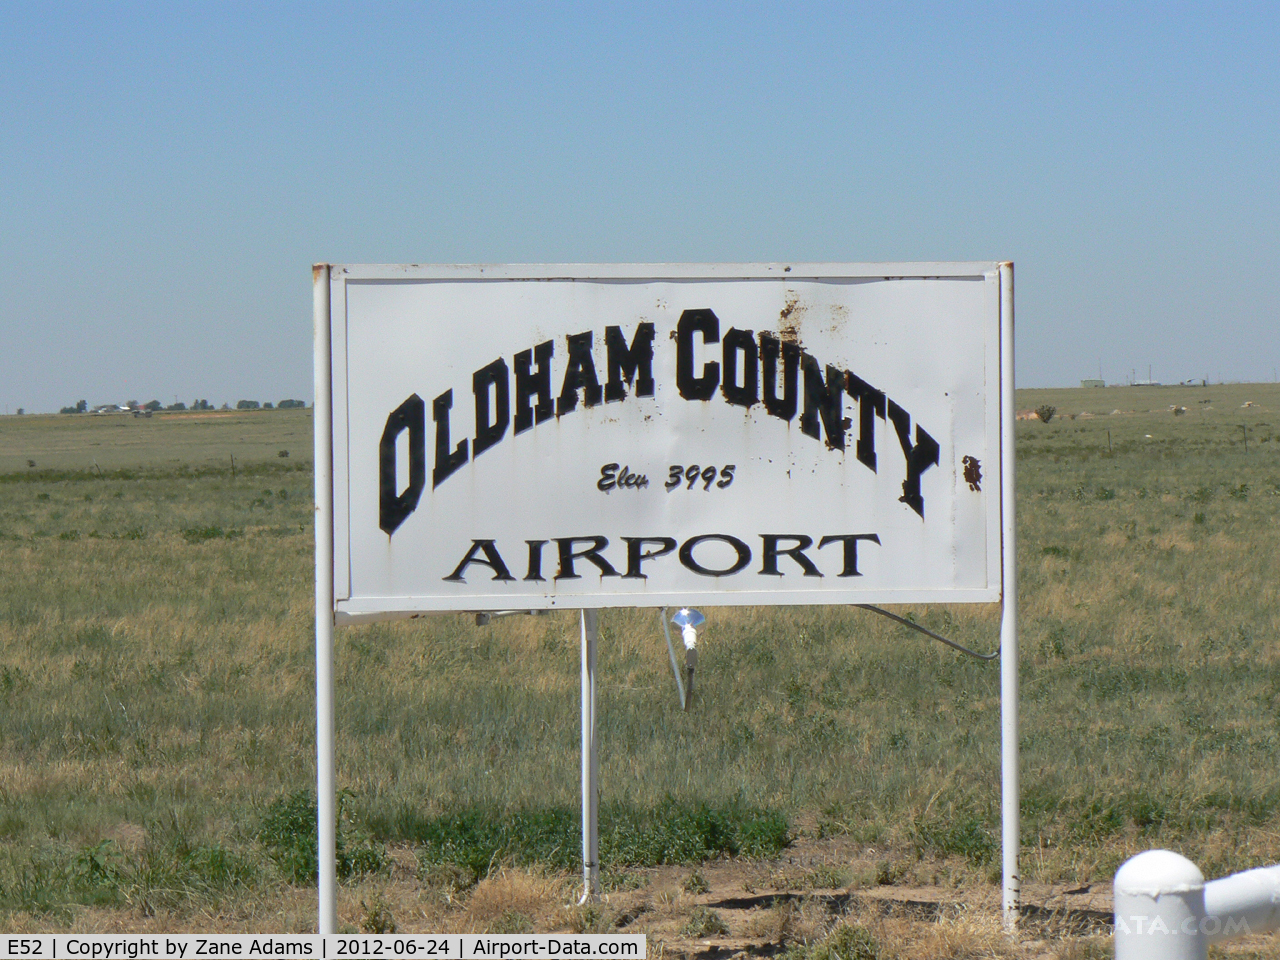 Oldham County Airport (E52) - Vega, Texas